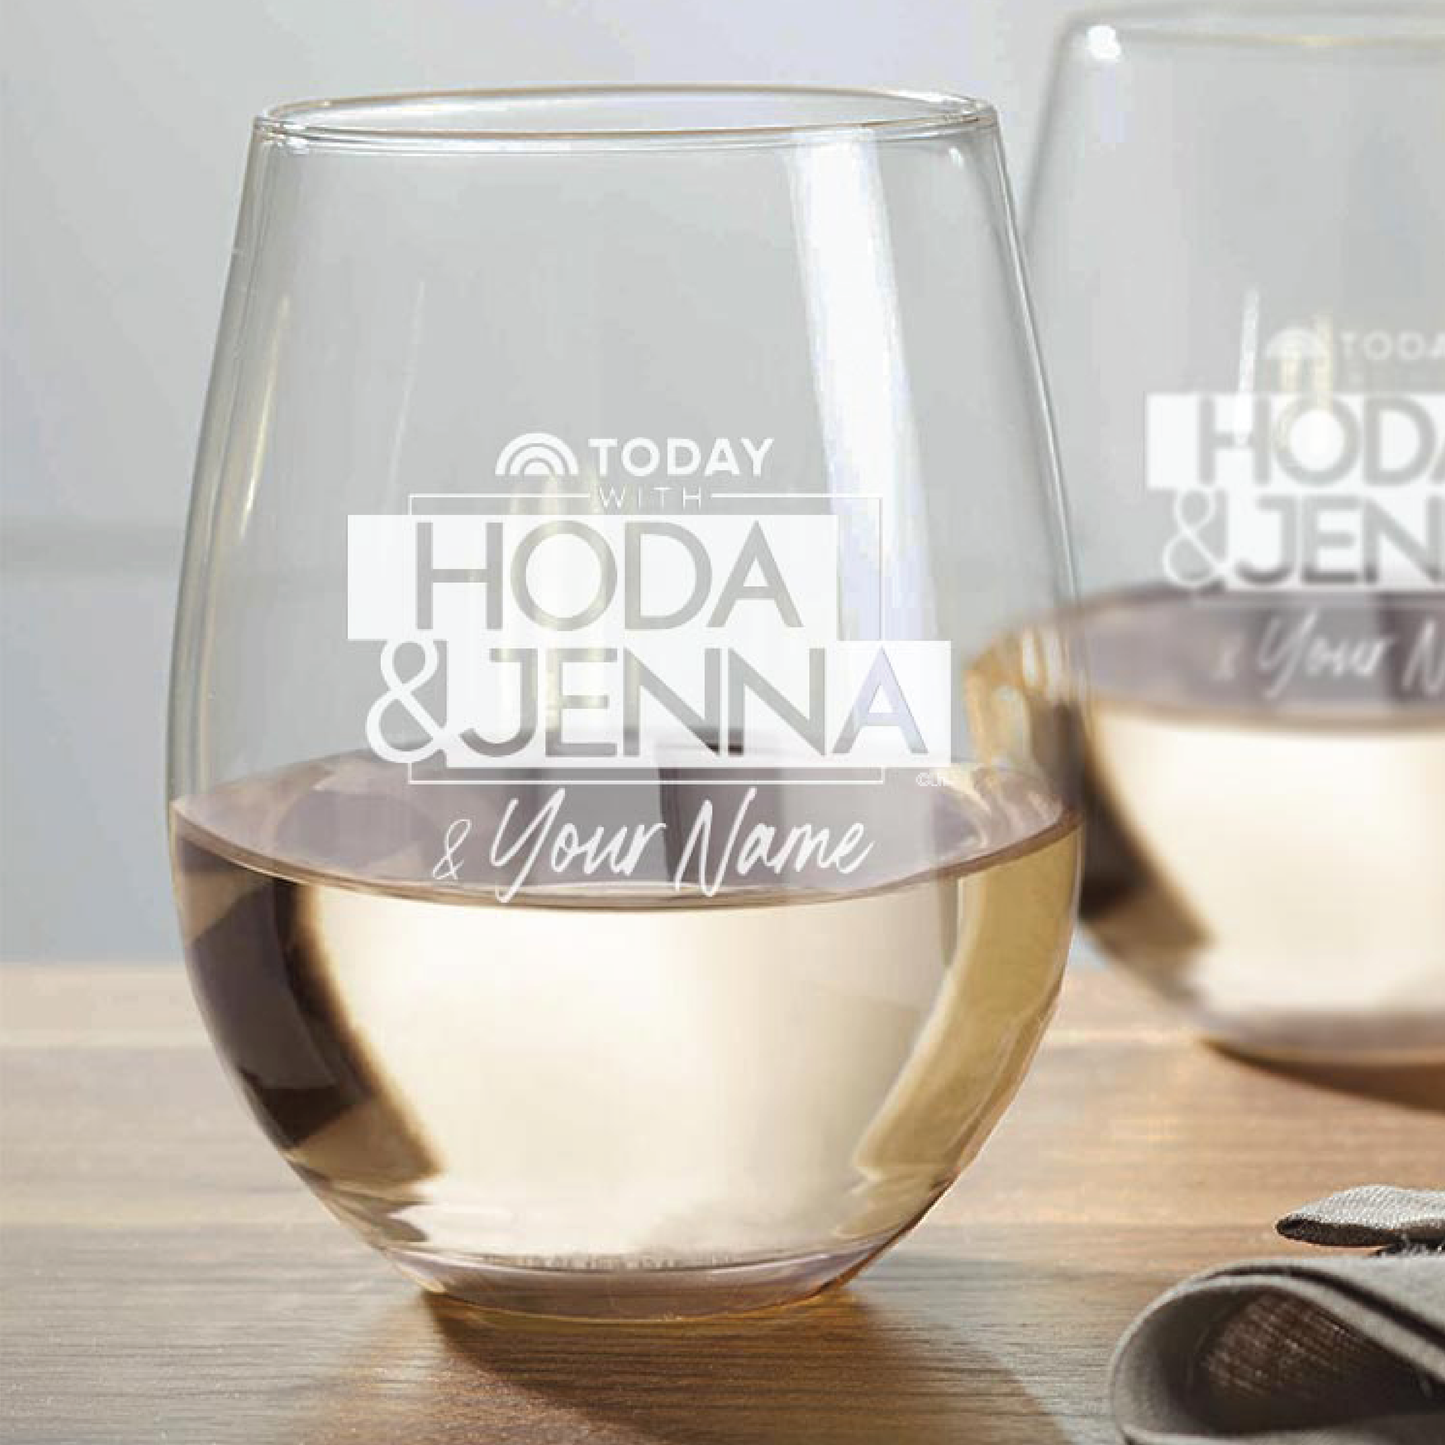 Desperate Housewives Logo Laser Engraved Stemless Wine Glass